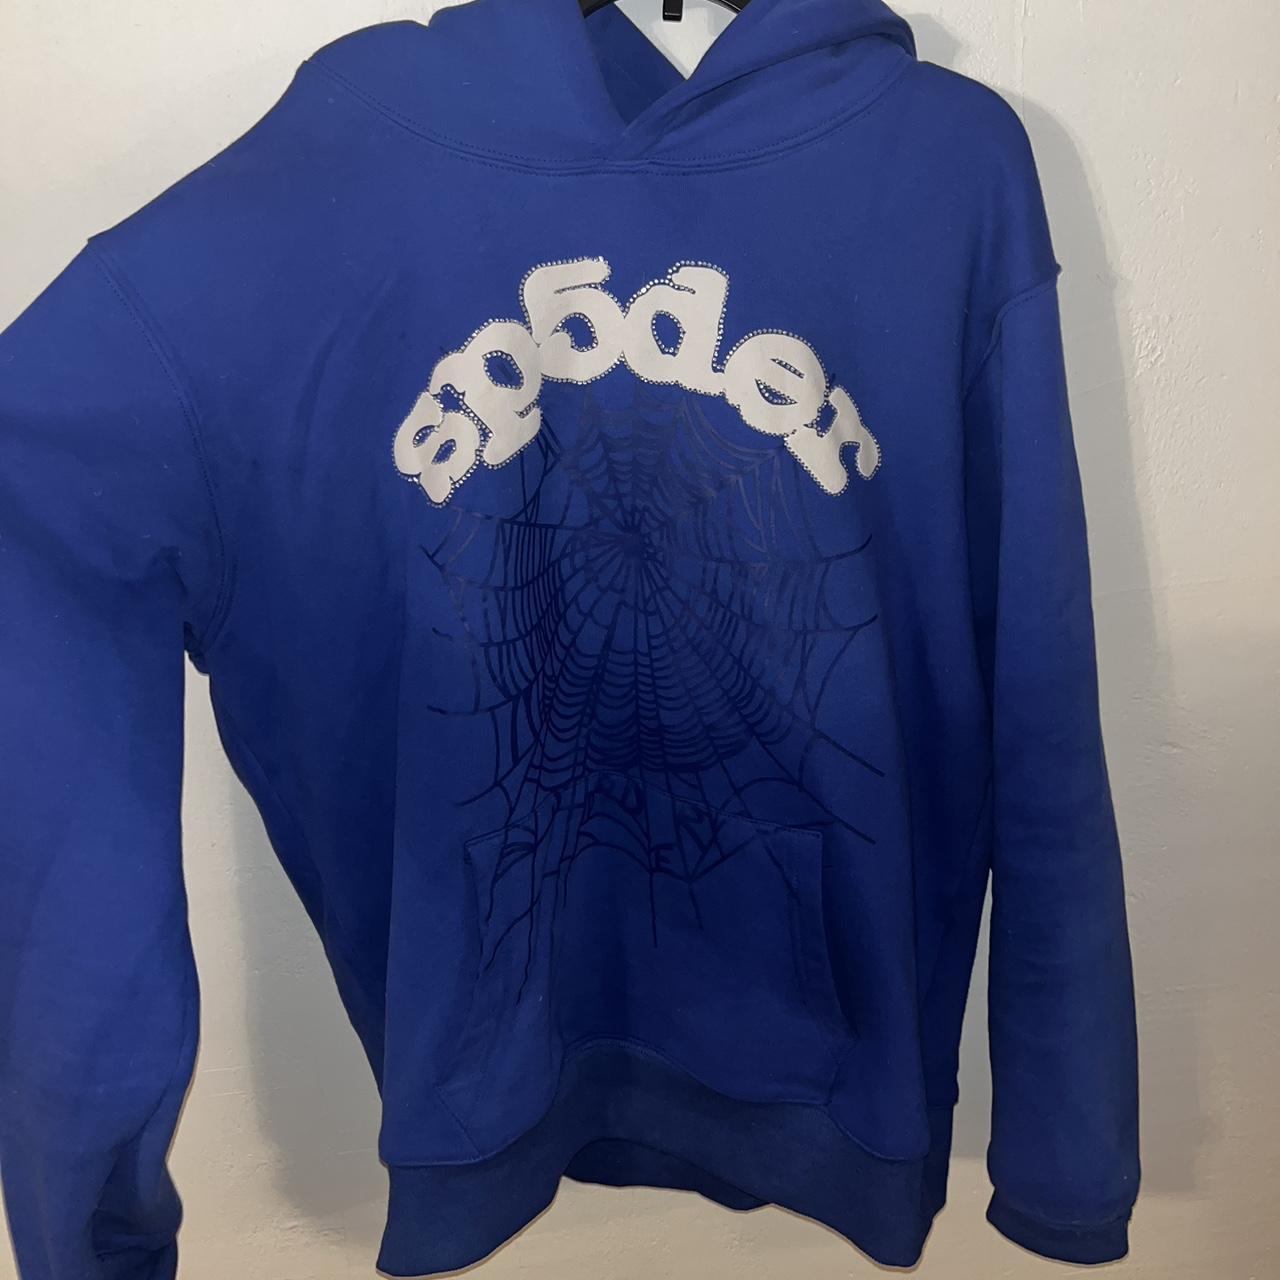 Sp5der Websuit Hoodie in blue. Great quality and... - Depop